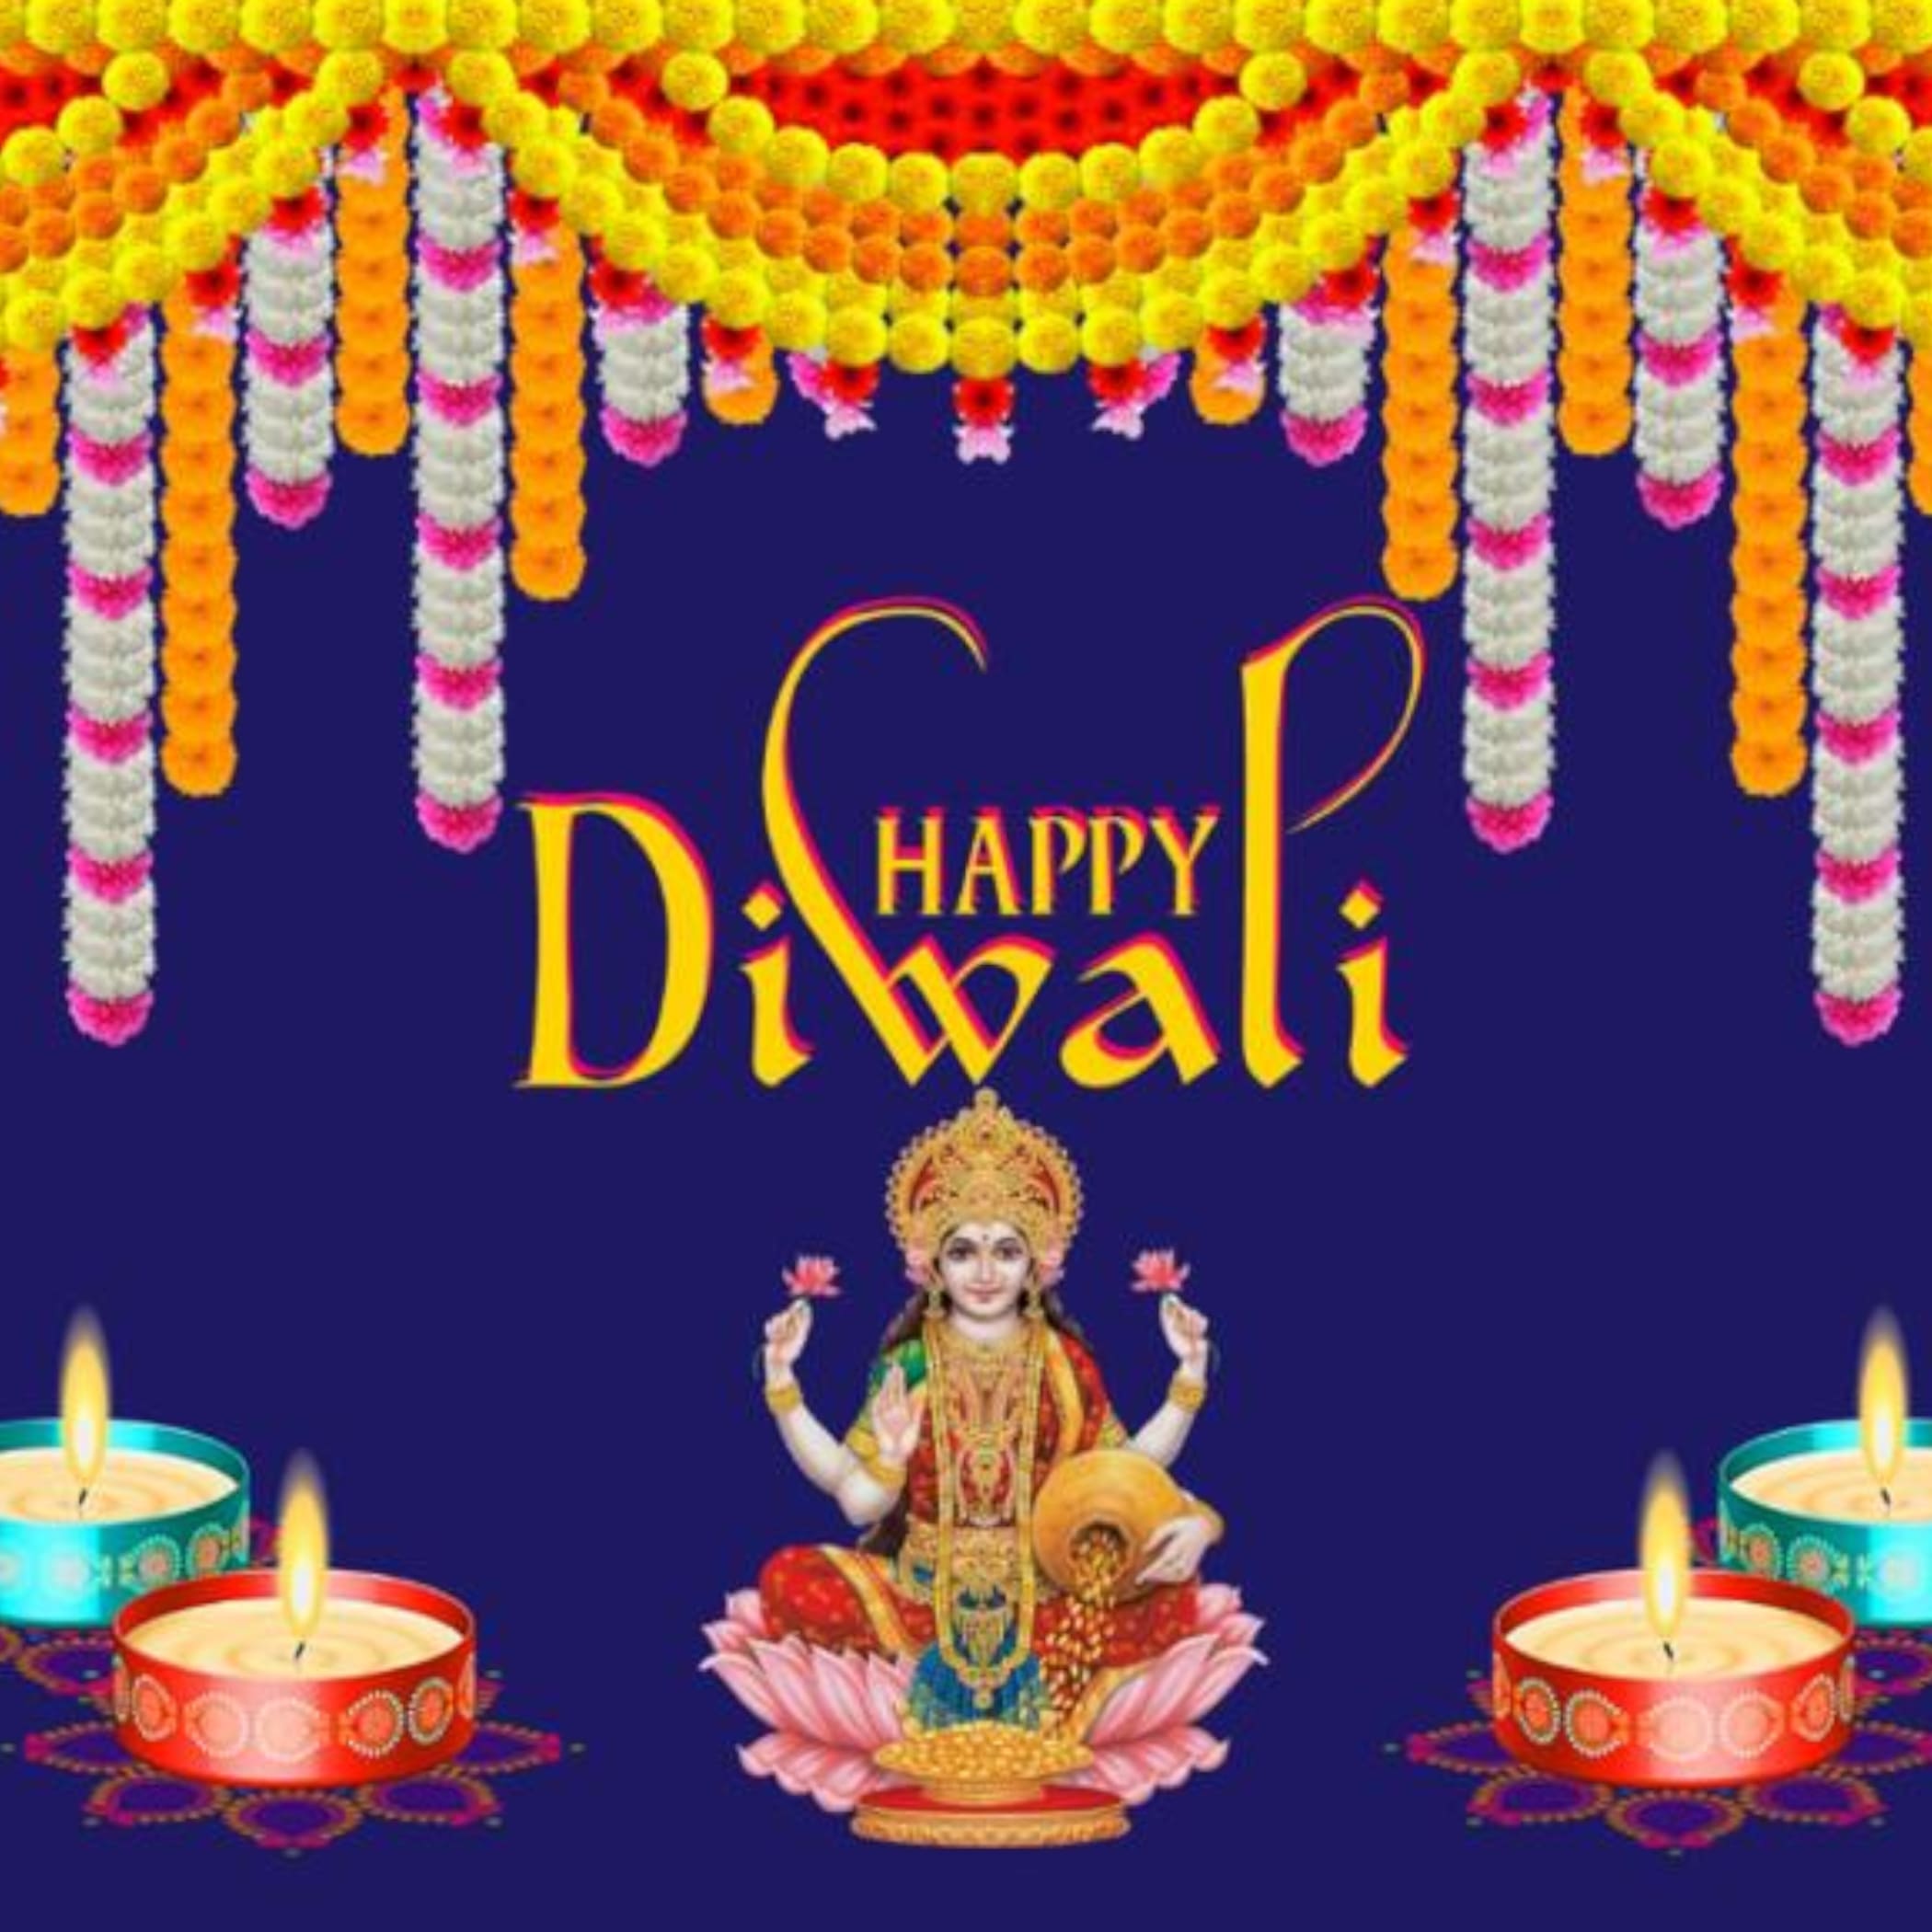 Happy diwali banner decoration decor backdrop cloth indian